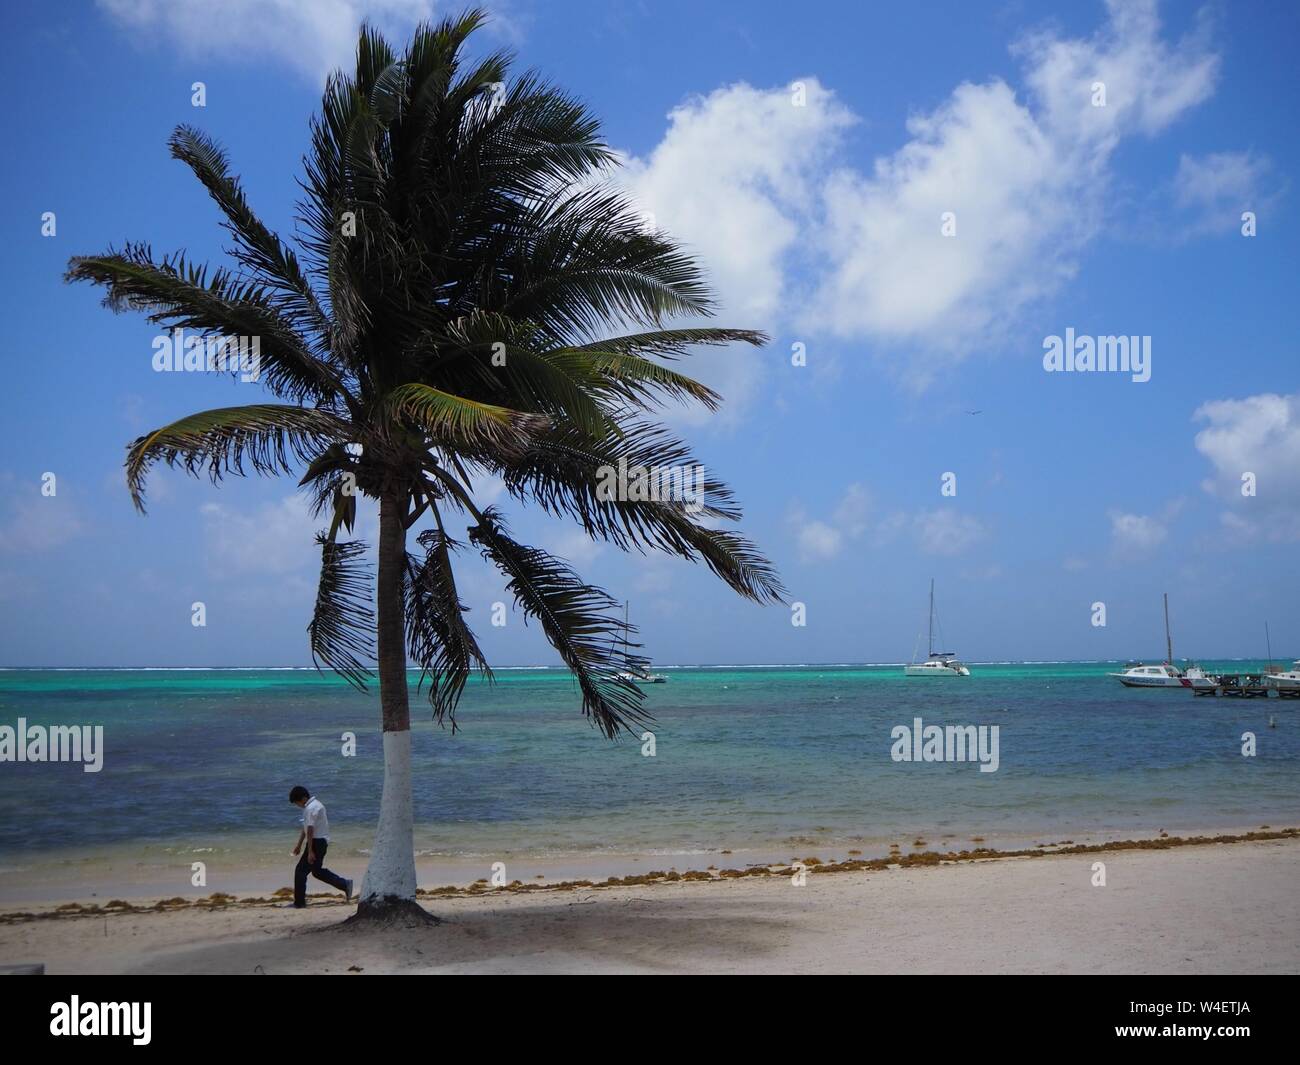 La spiaggia su Ambergris Caye, Beliaze, paradiso tropicale isola dei Caraibi. Foto Stock